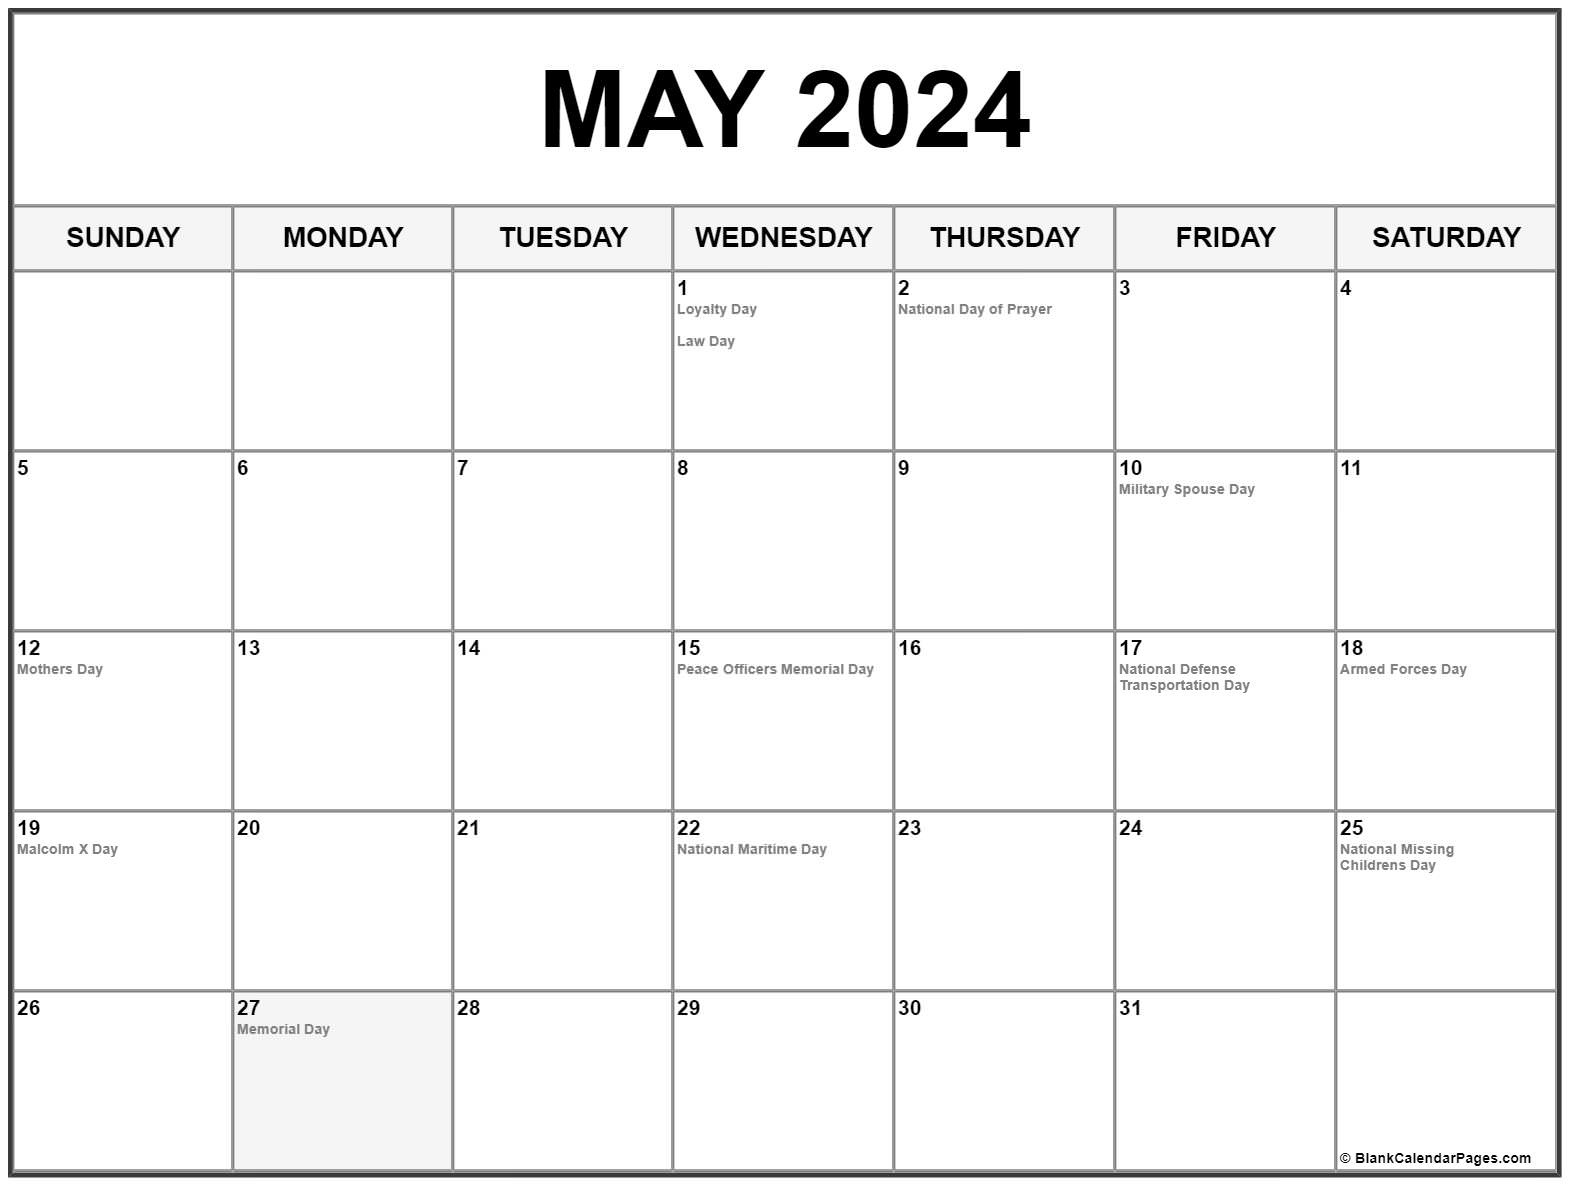 May 2021 Calendar With Holidays May 2021 calendar with holidays